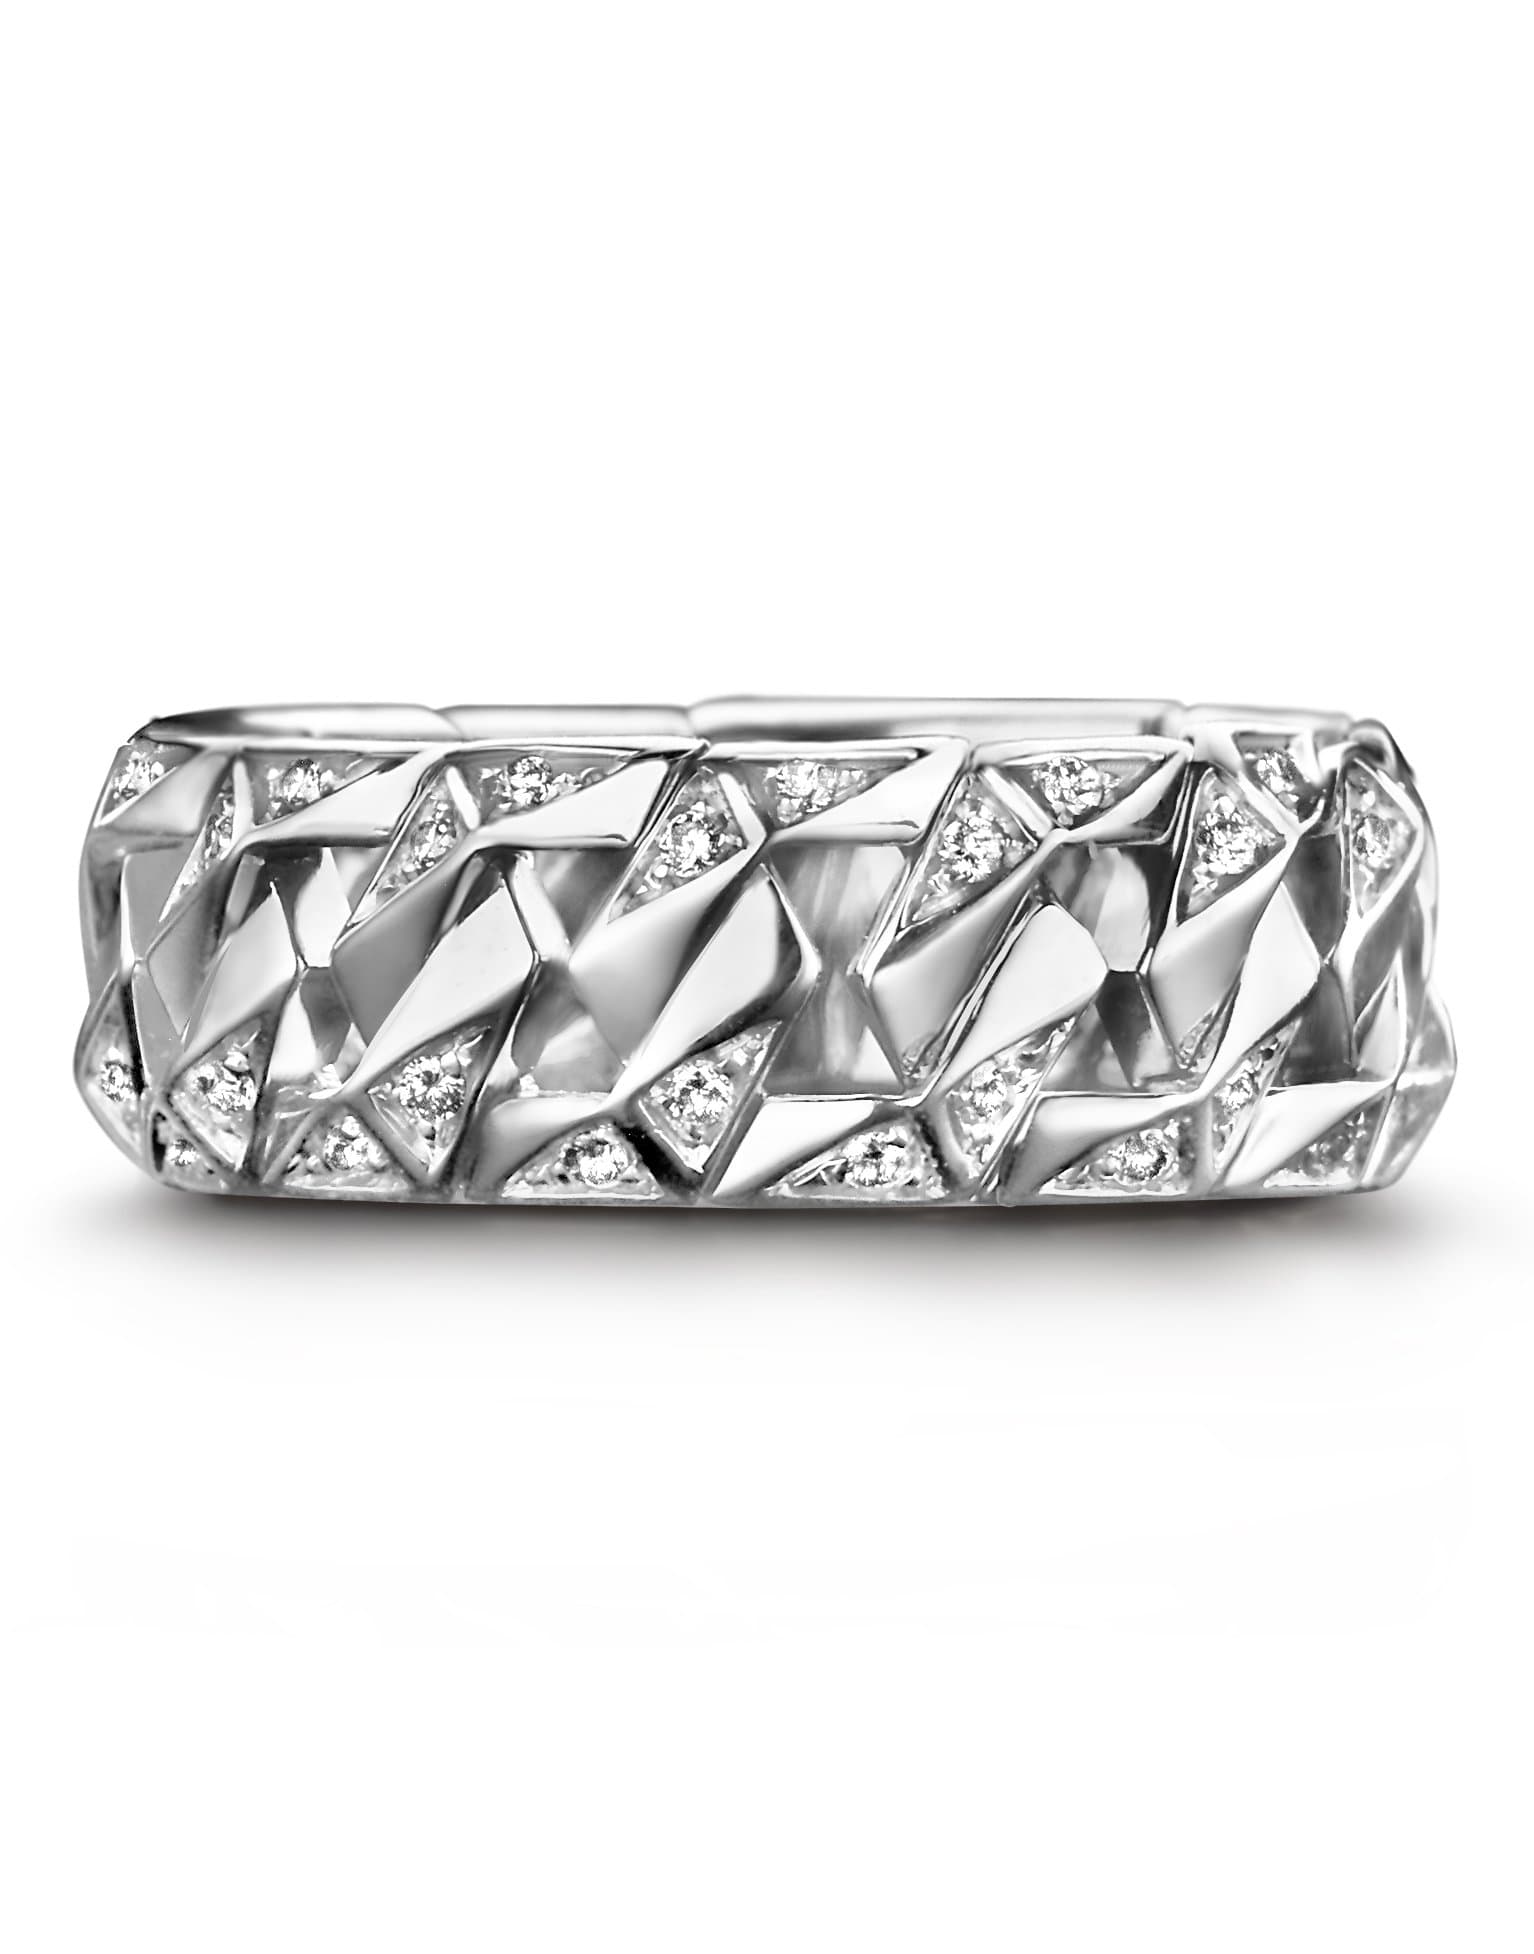 DRIES CRIEL-BOND Signature White Diamond Ring-7